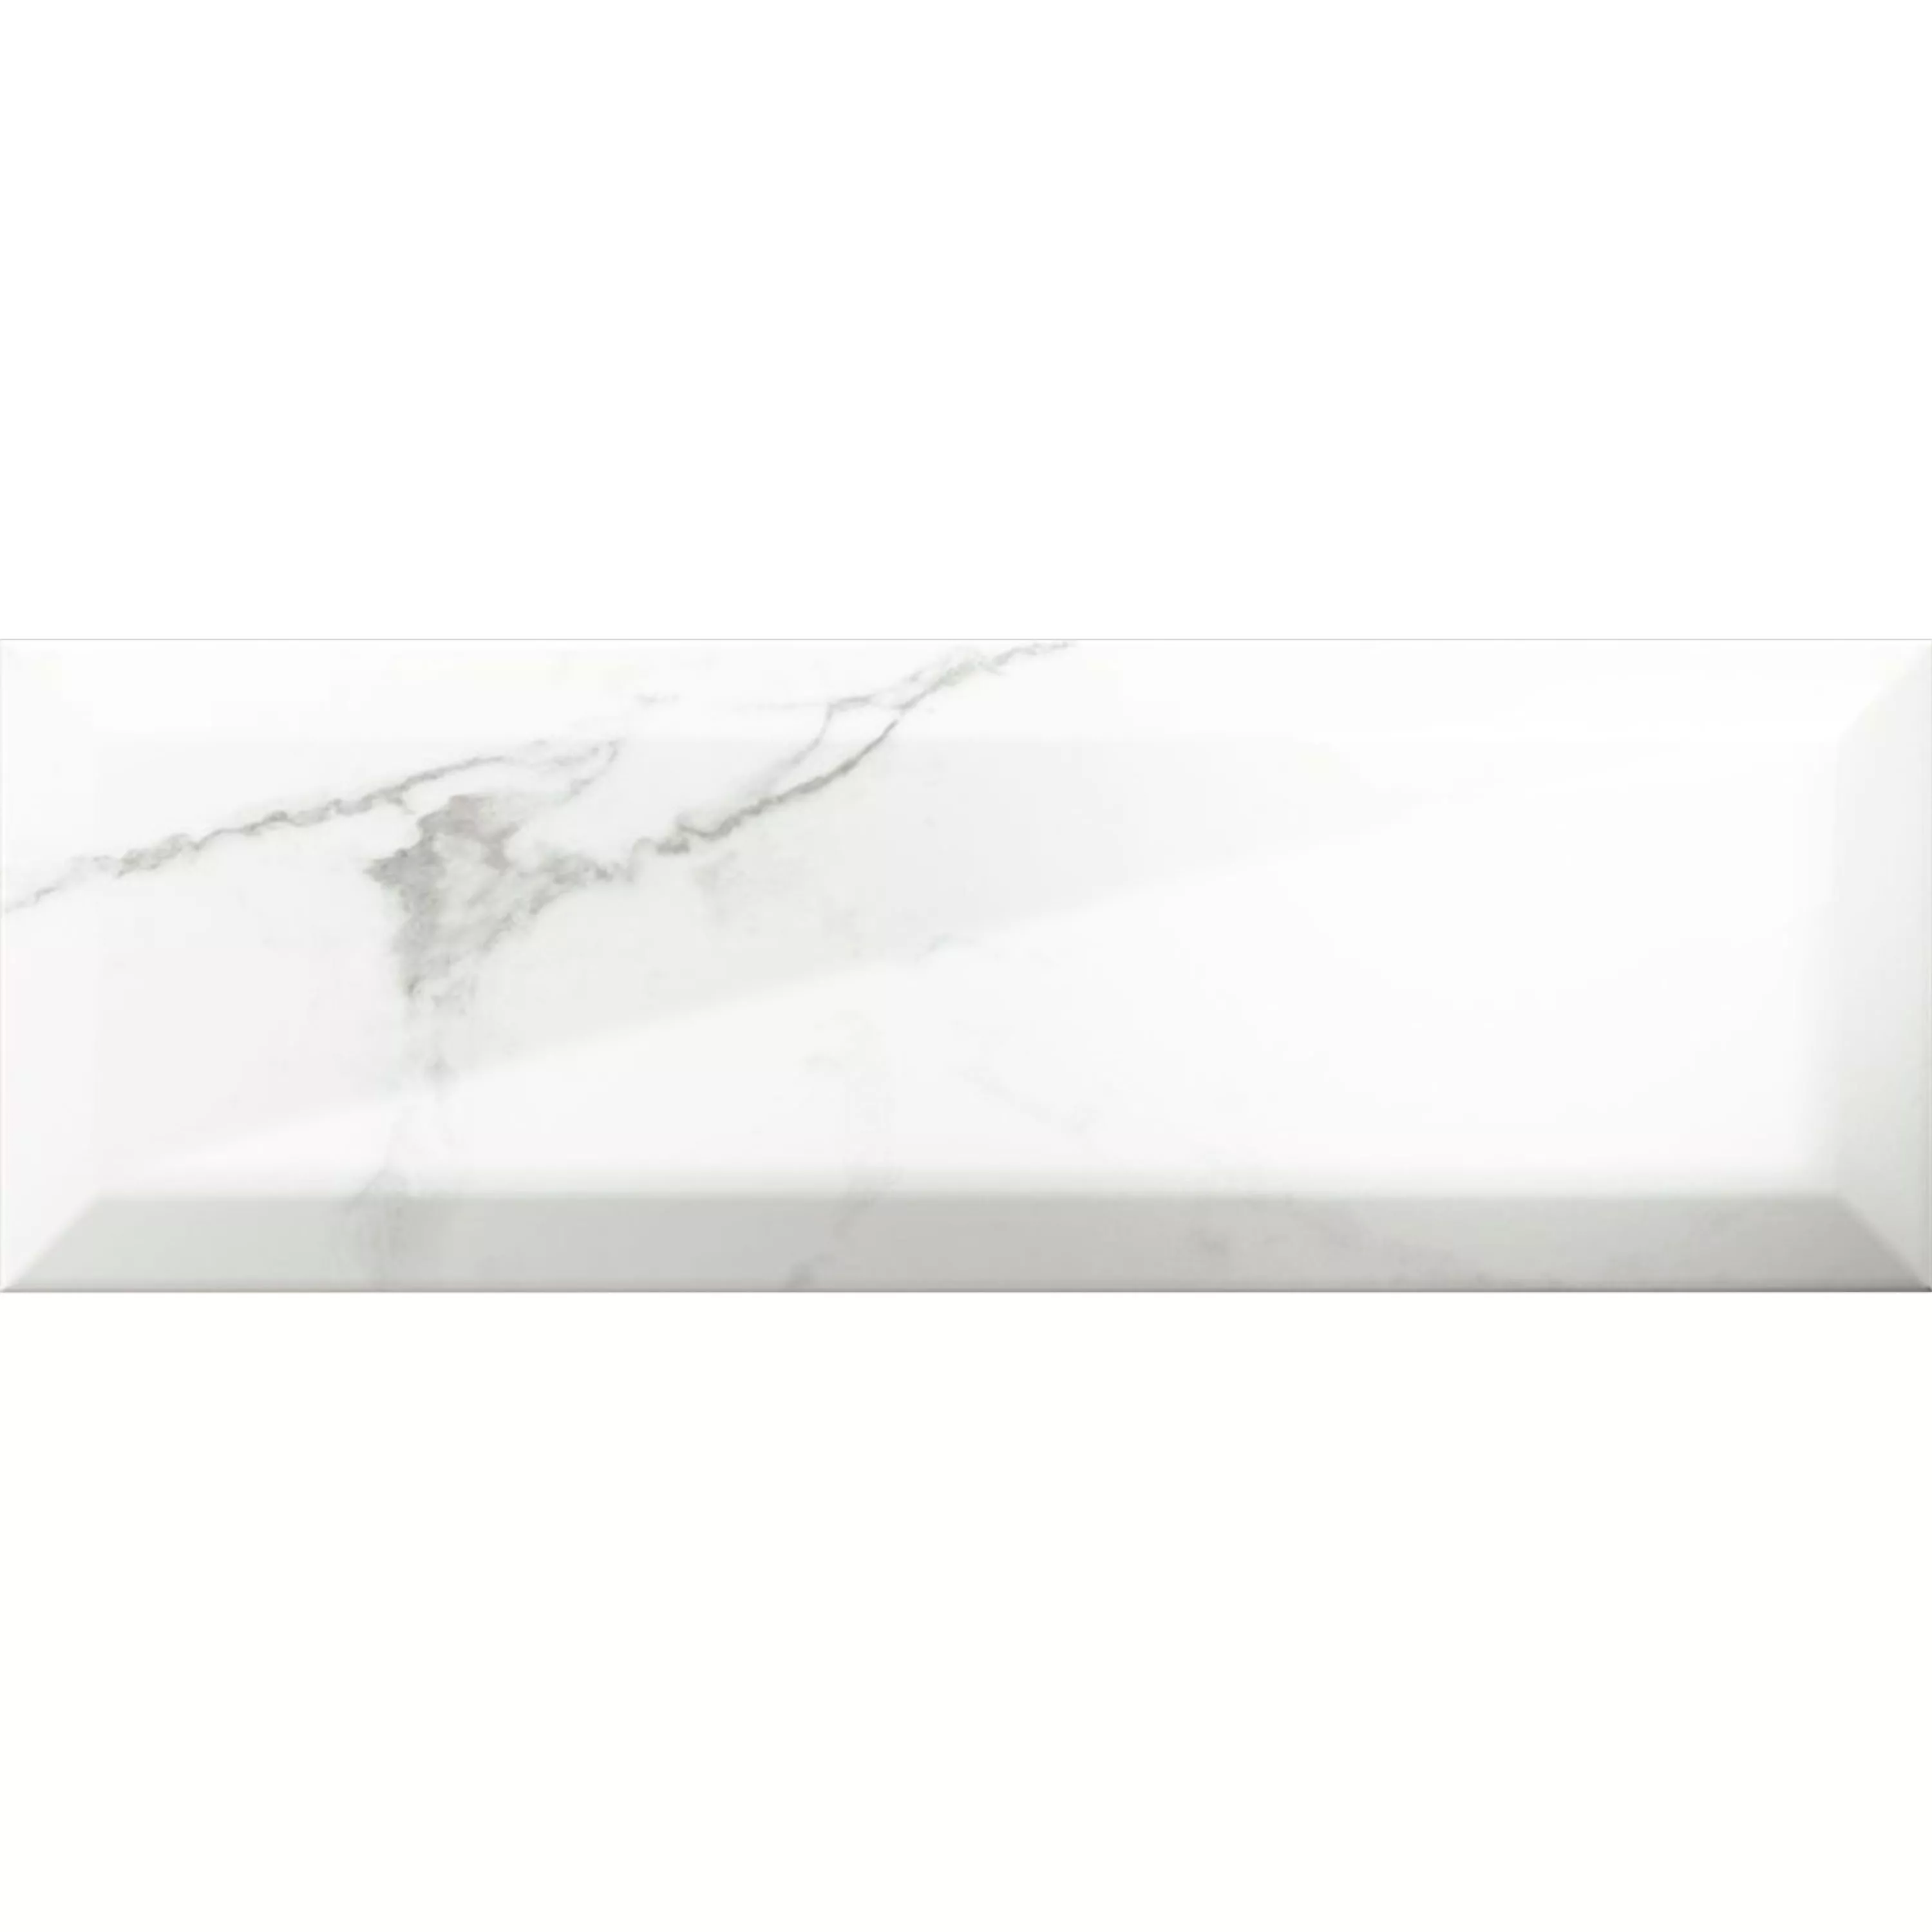 Metro Wandfliesen Girona Marmoroptik Facette Weiß Glänzend 10x30cm